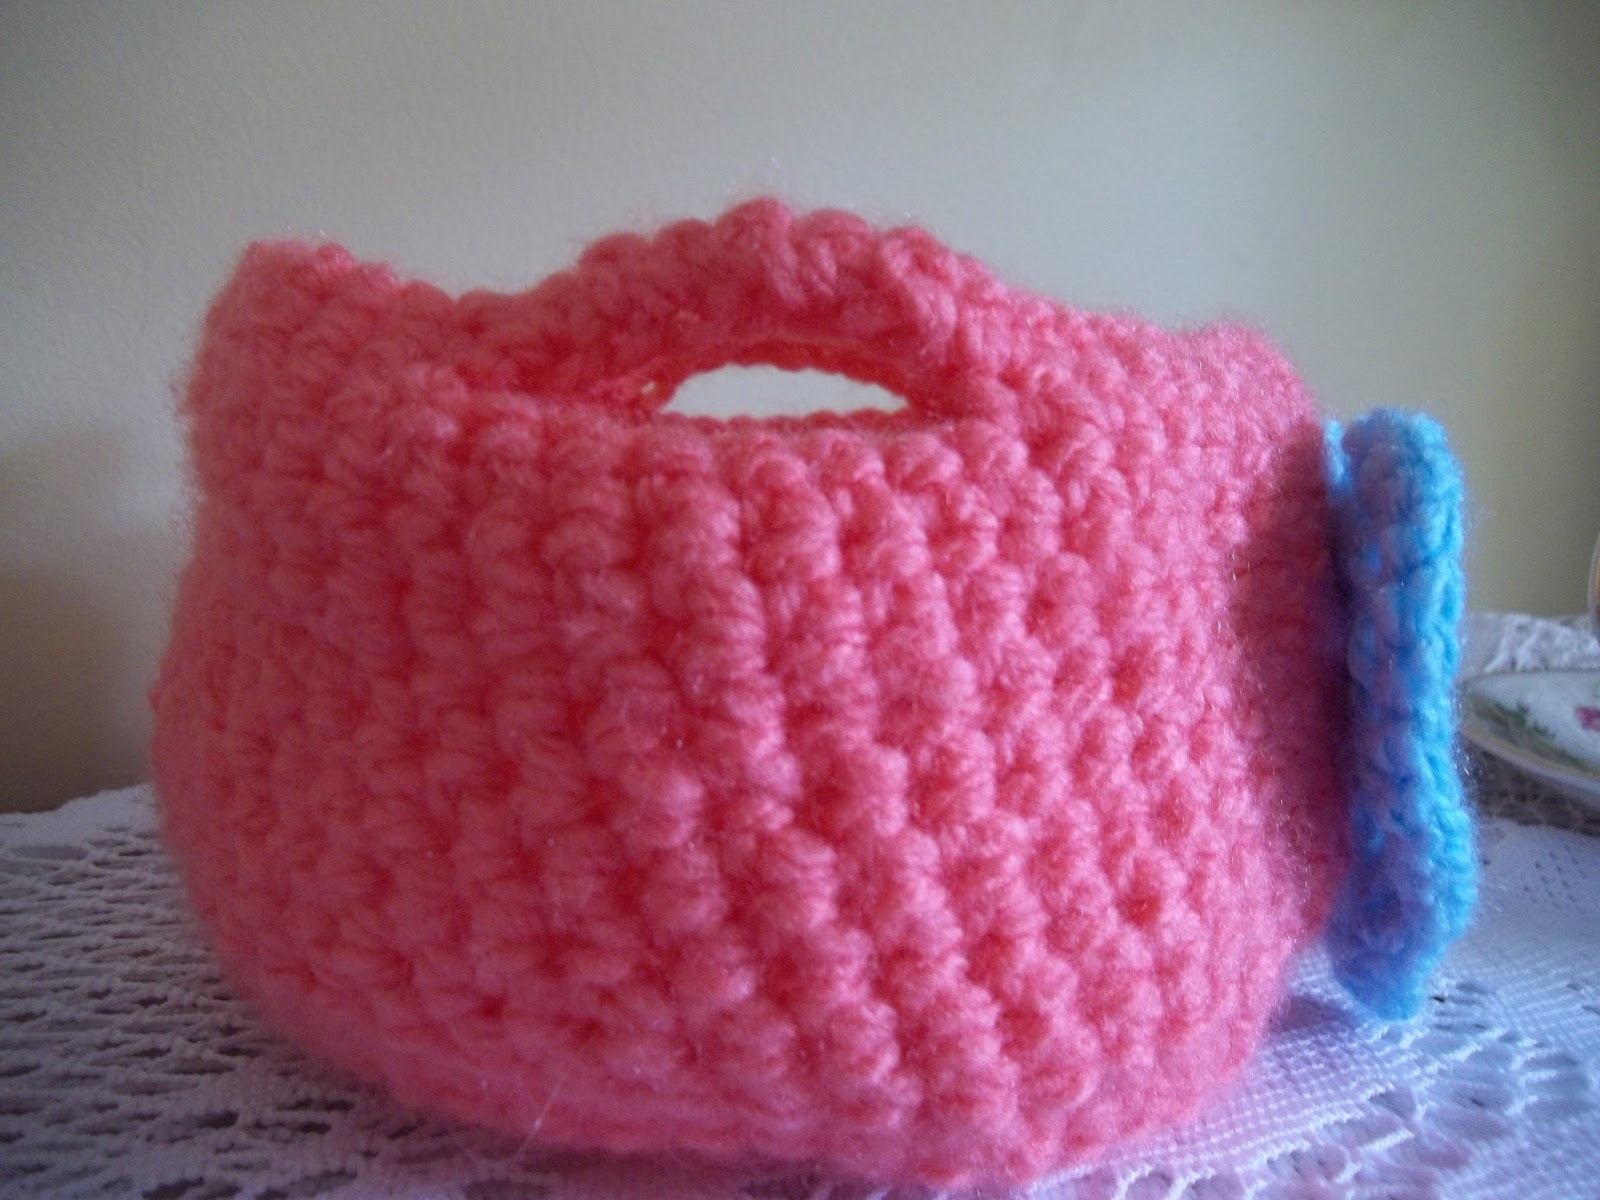 Ashley's Crochet Corner: A darling little basket...